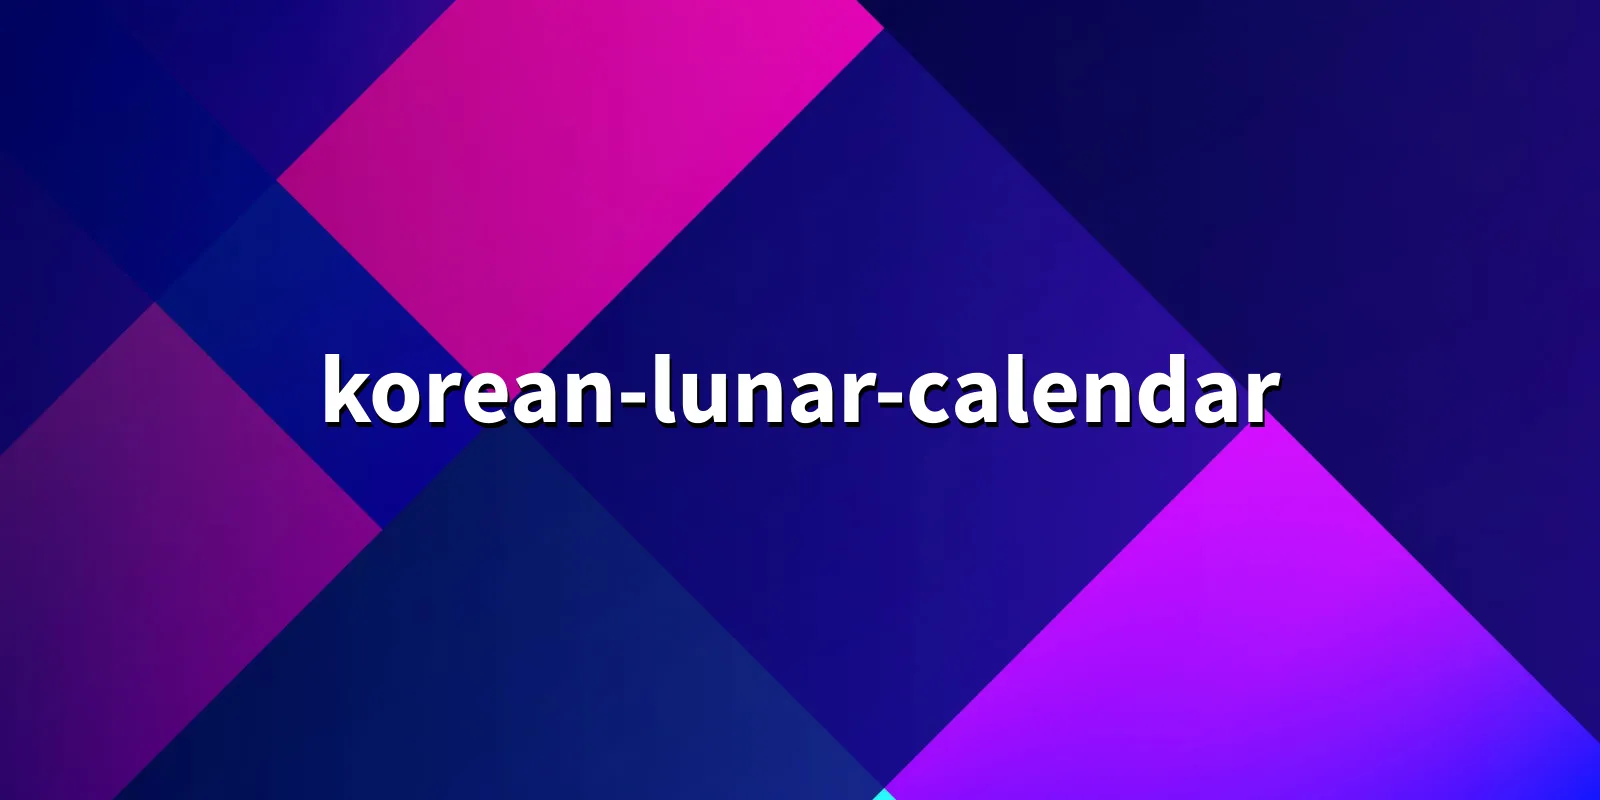 /pkg/k/korean-lunar-calendar/korean-lunar-calendar-banner.webp